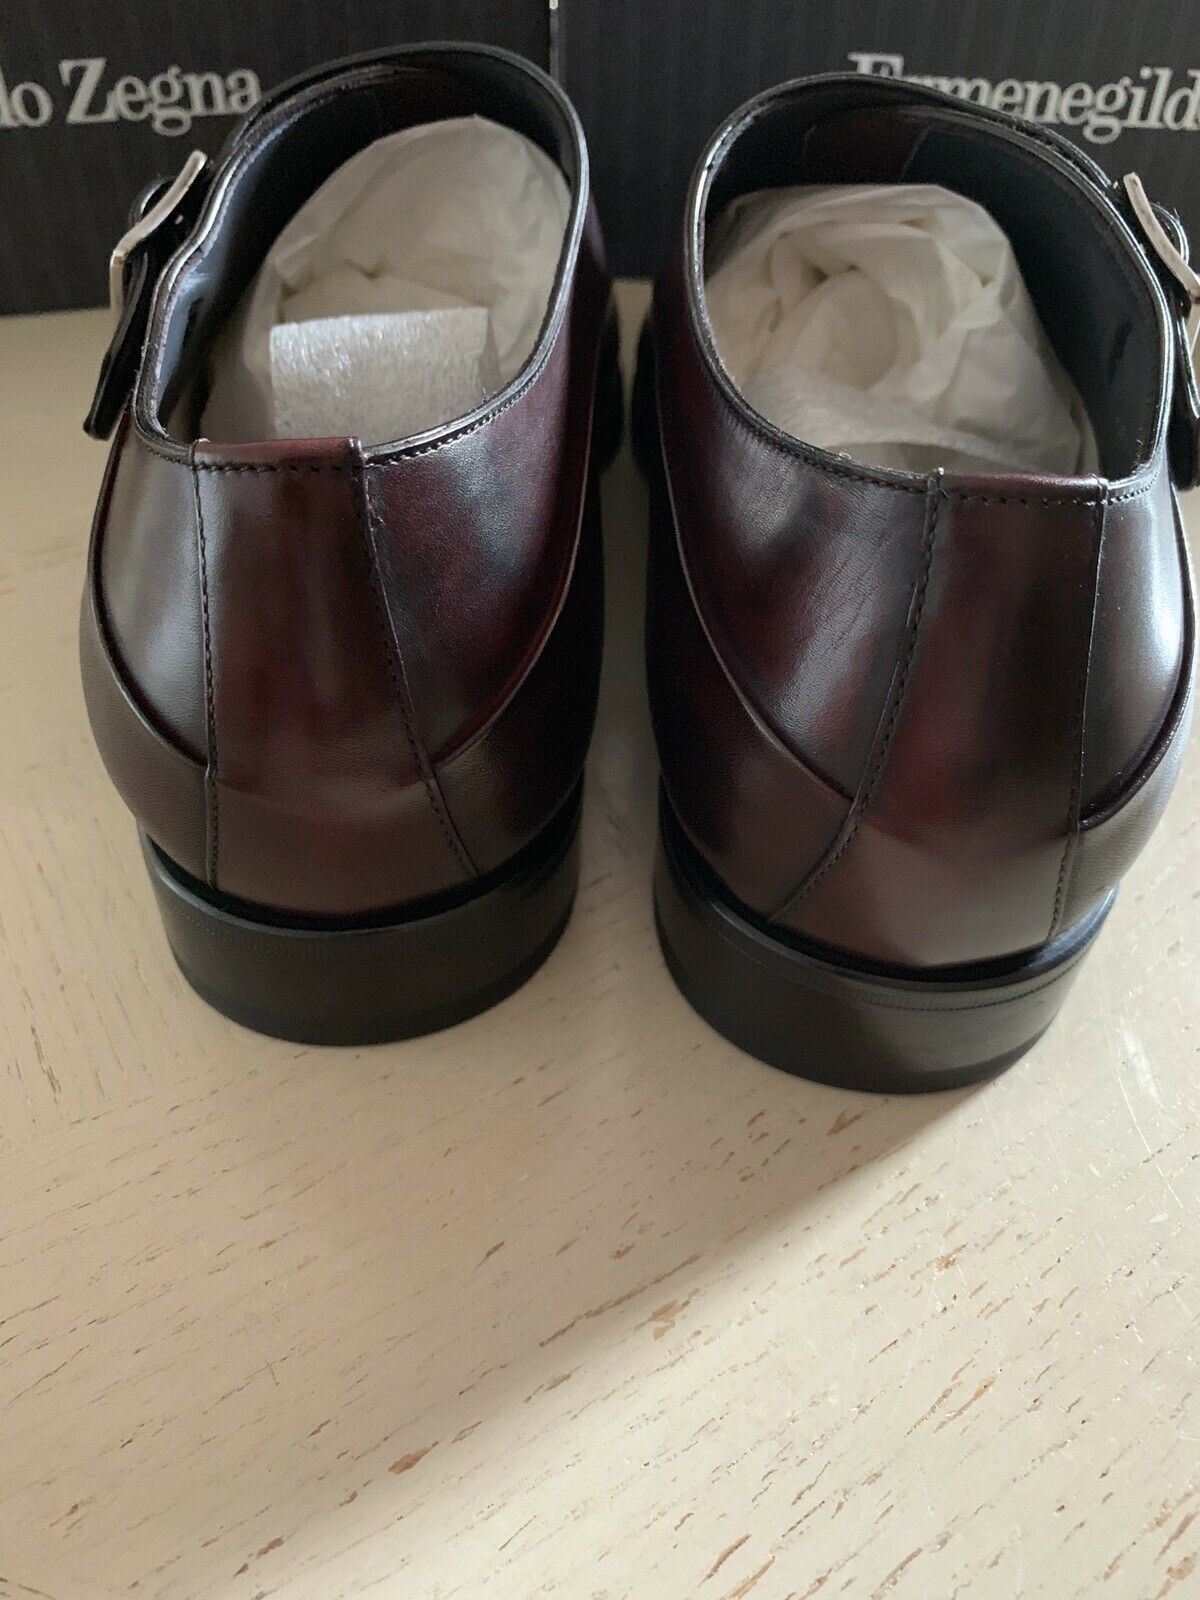 New $1350 Ermenegildo Zegna Couture Monk Brogues Leather Shoes Burgundy ...